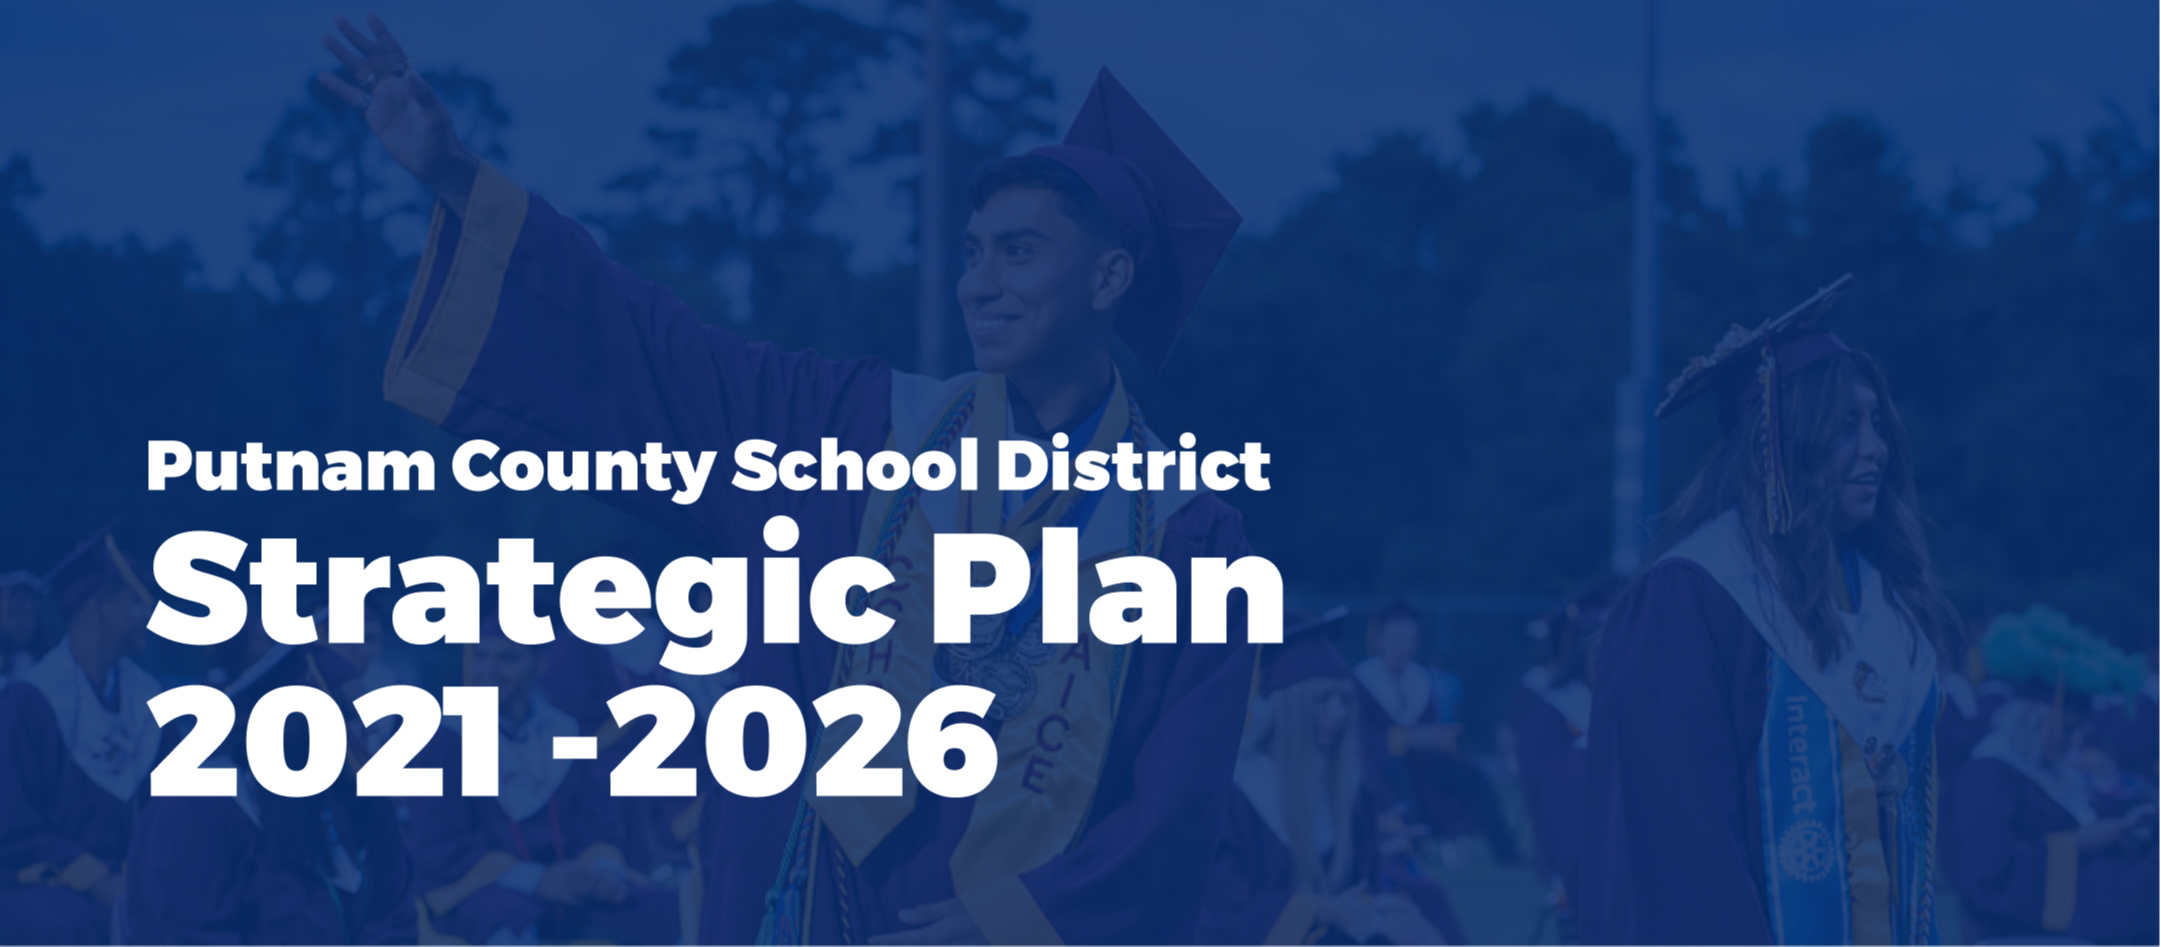 strategic plan 2021 2026 cover image smiling student